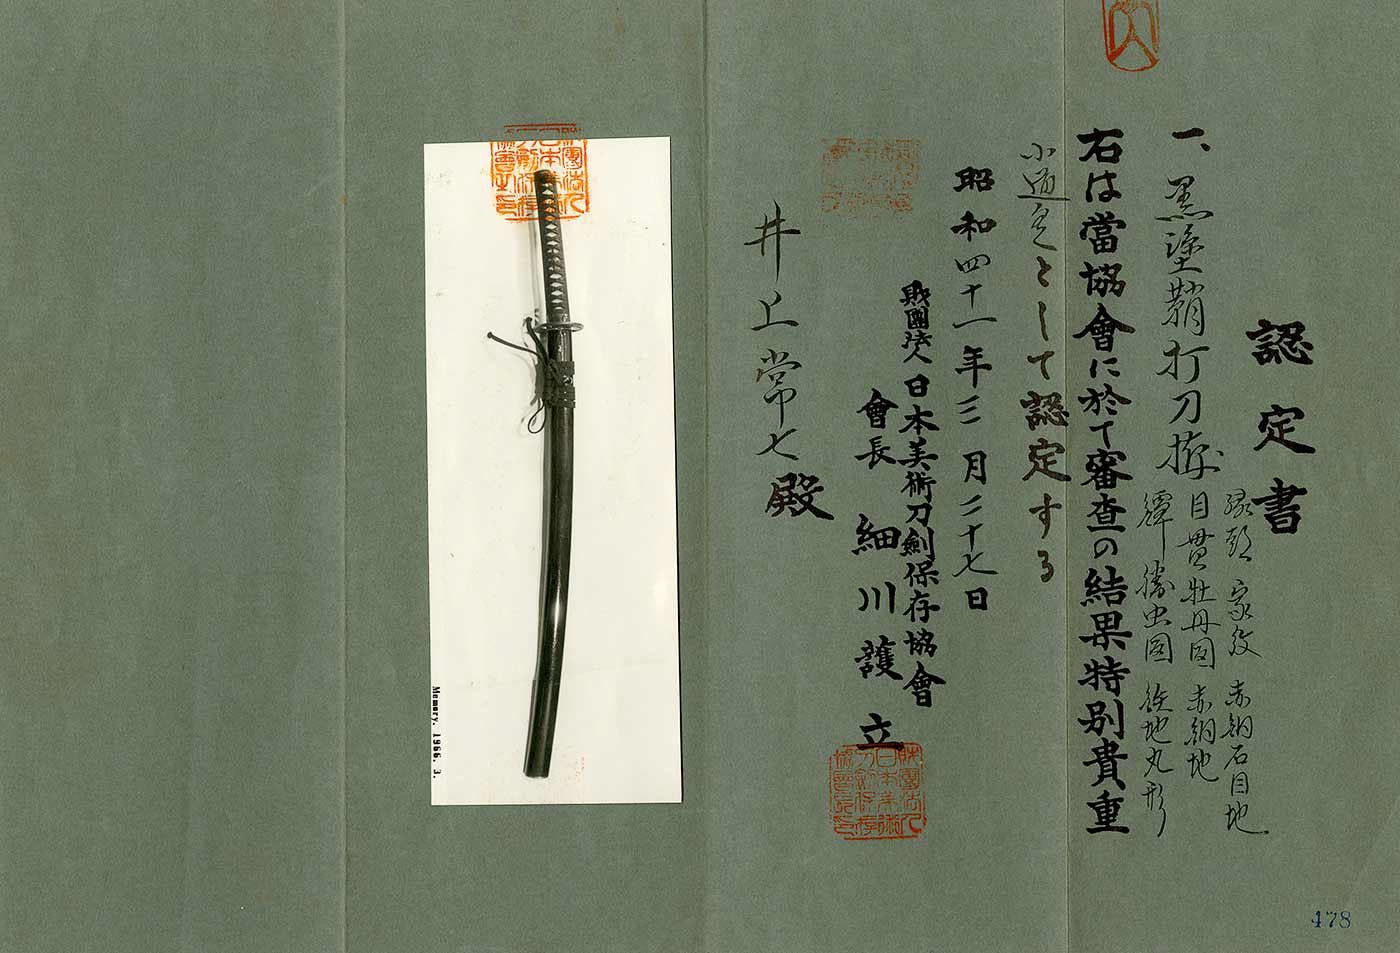 Early Edo period (1615-1867), 17th century ?NBTHK hozon Token to Ise Daijo Yoshihiro

Measures:
Nagasa [length] 71.2 cm
Sori [curvature] 1.8 cm
Motohaba 3.15 cm
Sakihaba 2.3 cm
Kasane [thickness] 8 mm

Sugata [configuration]
Shinogi-zukuri